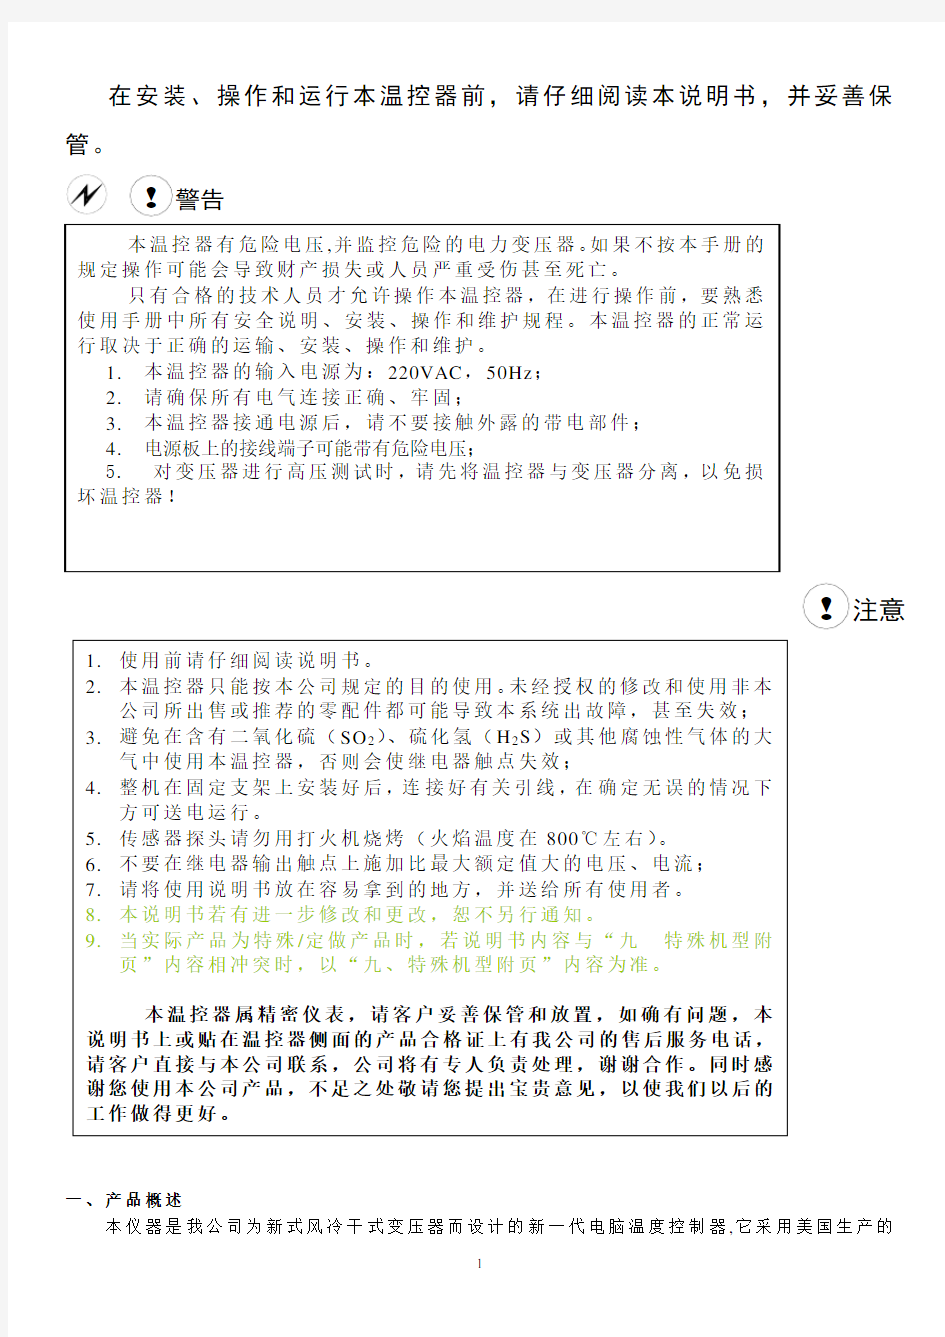 BWDK-26系列中文说明书(干变温控器)